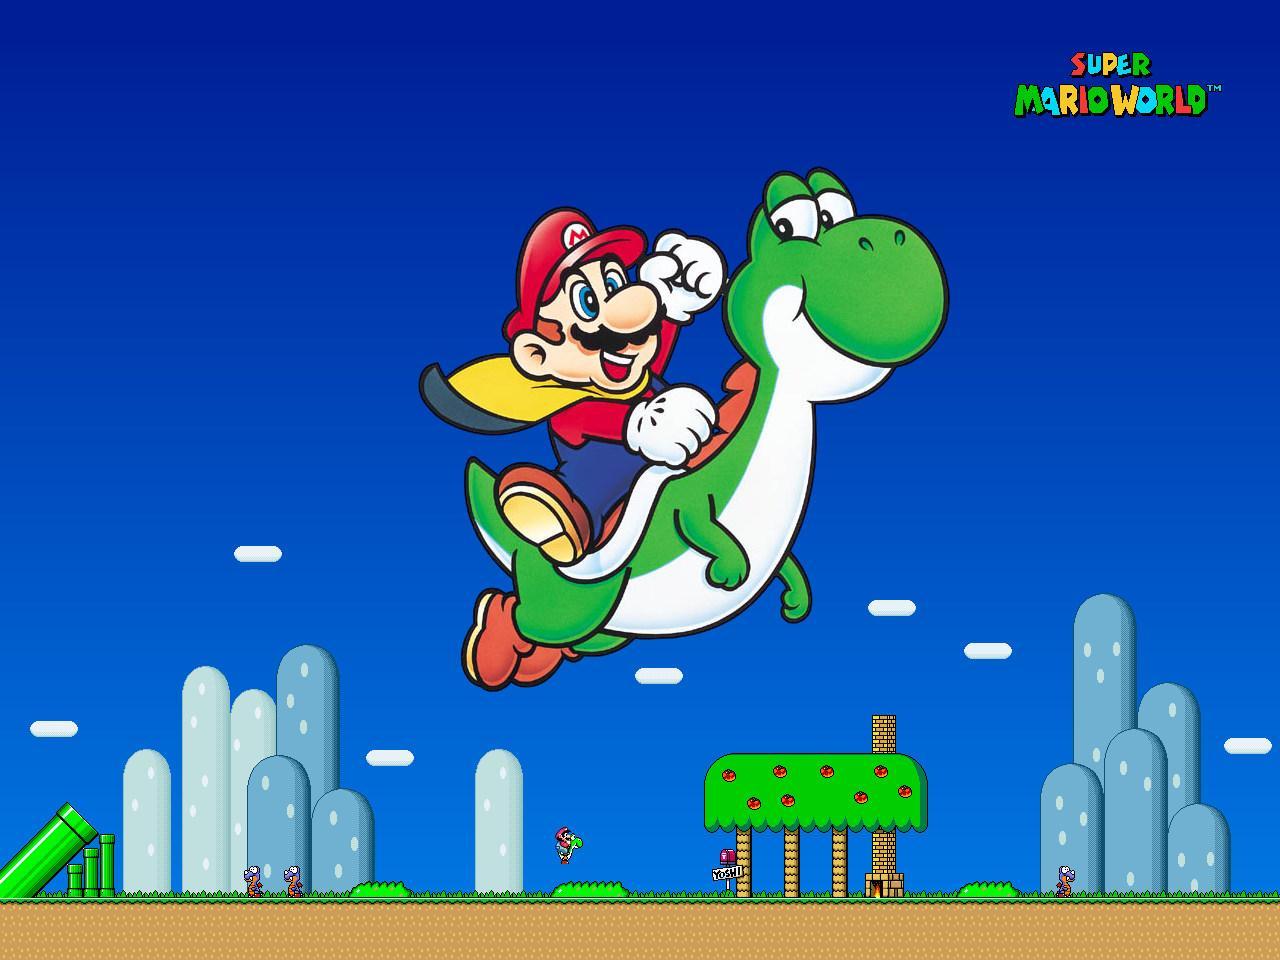 Super Mario World for snes 